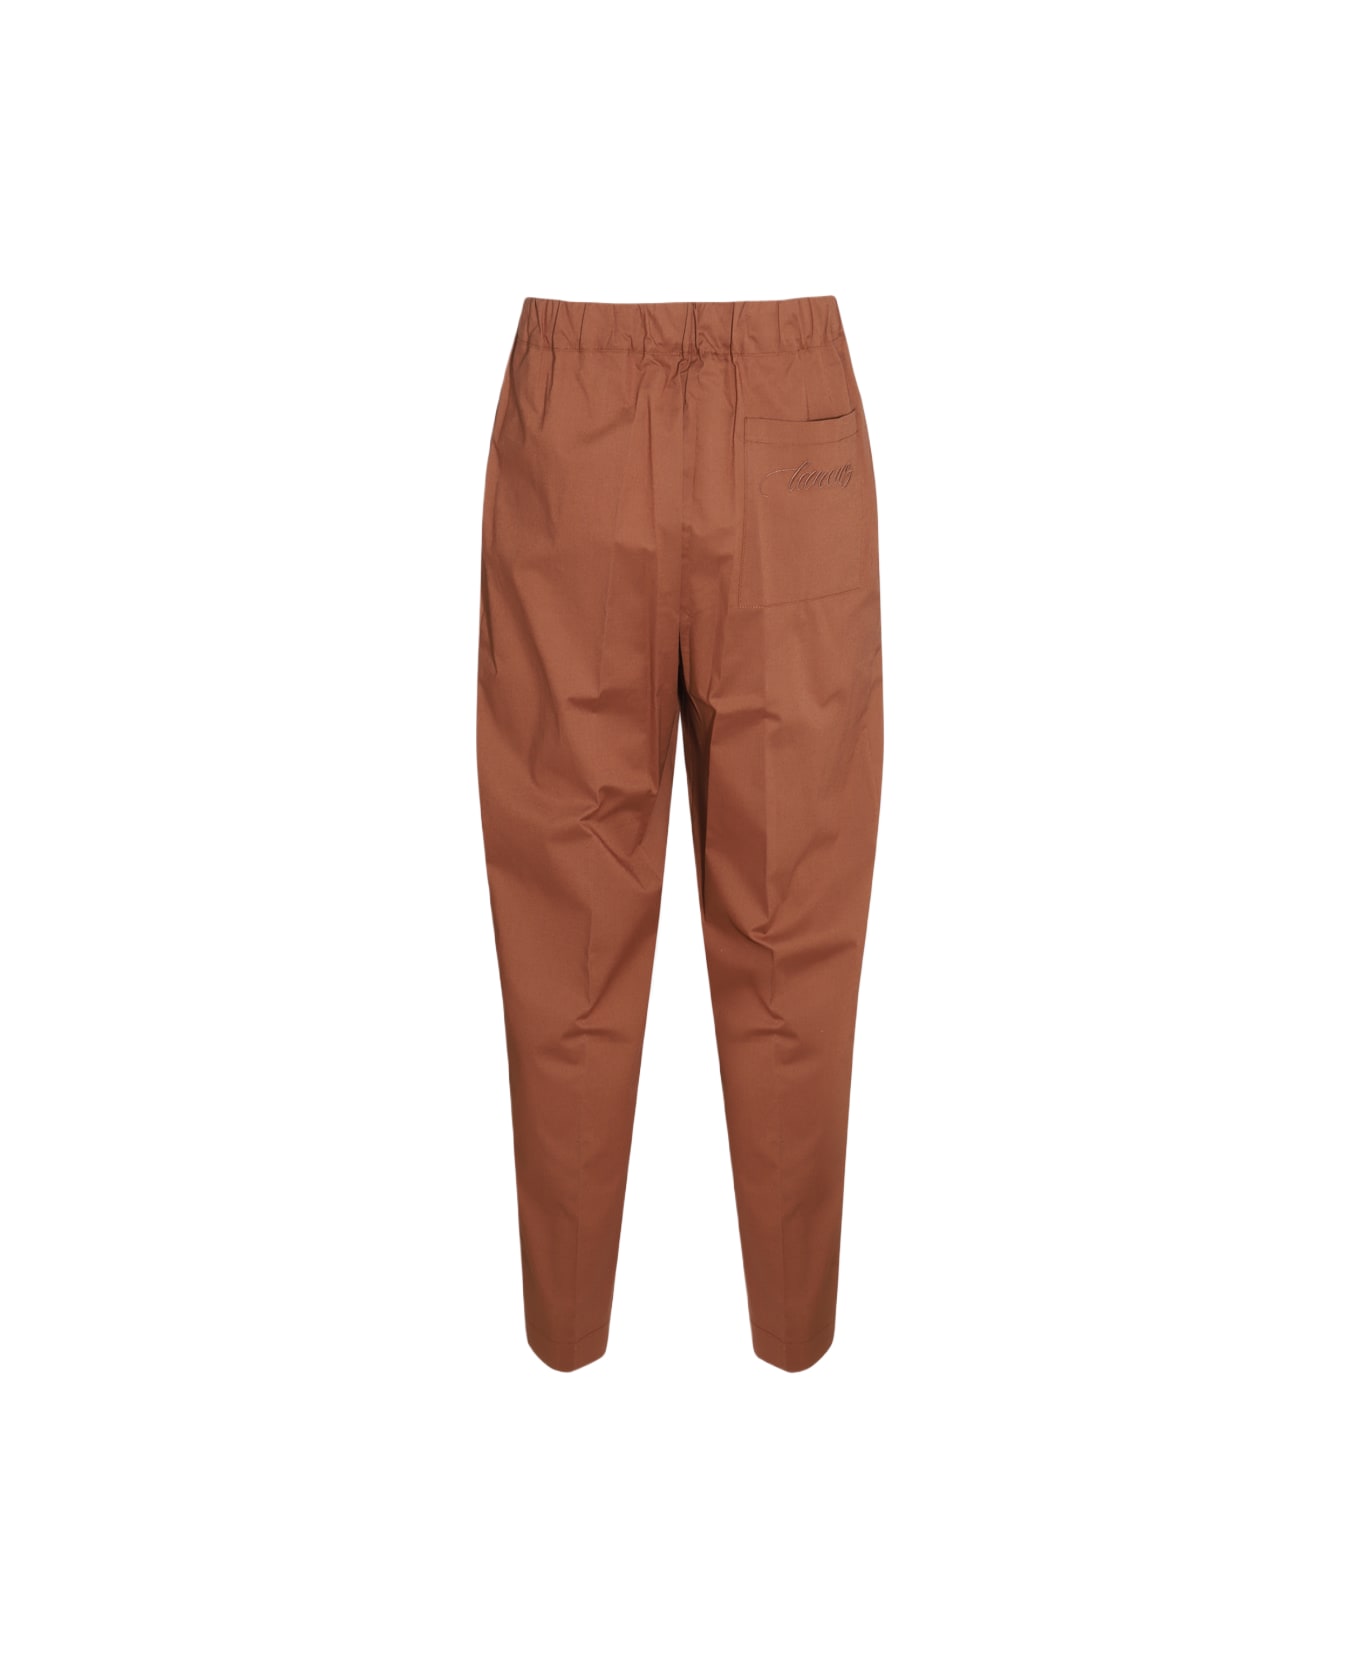 Laneus Brown Chocolate Cotton Stretch Pants